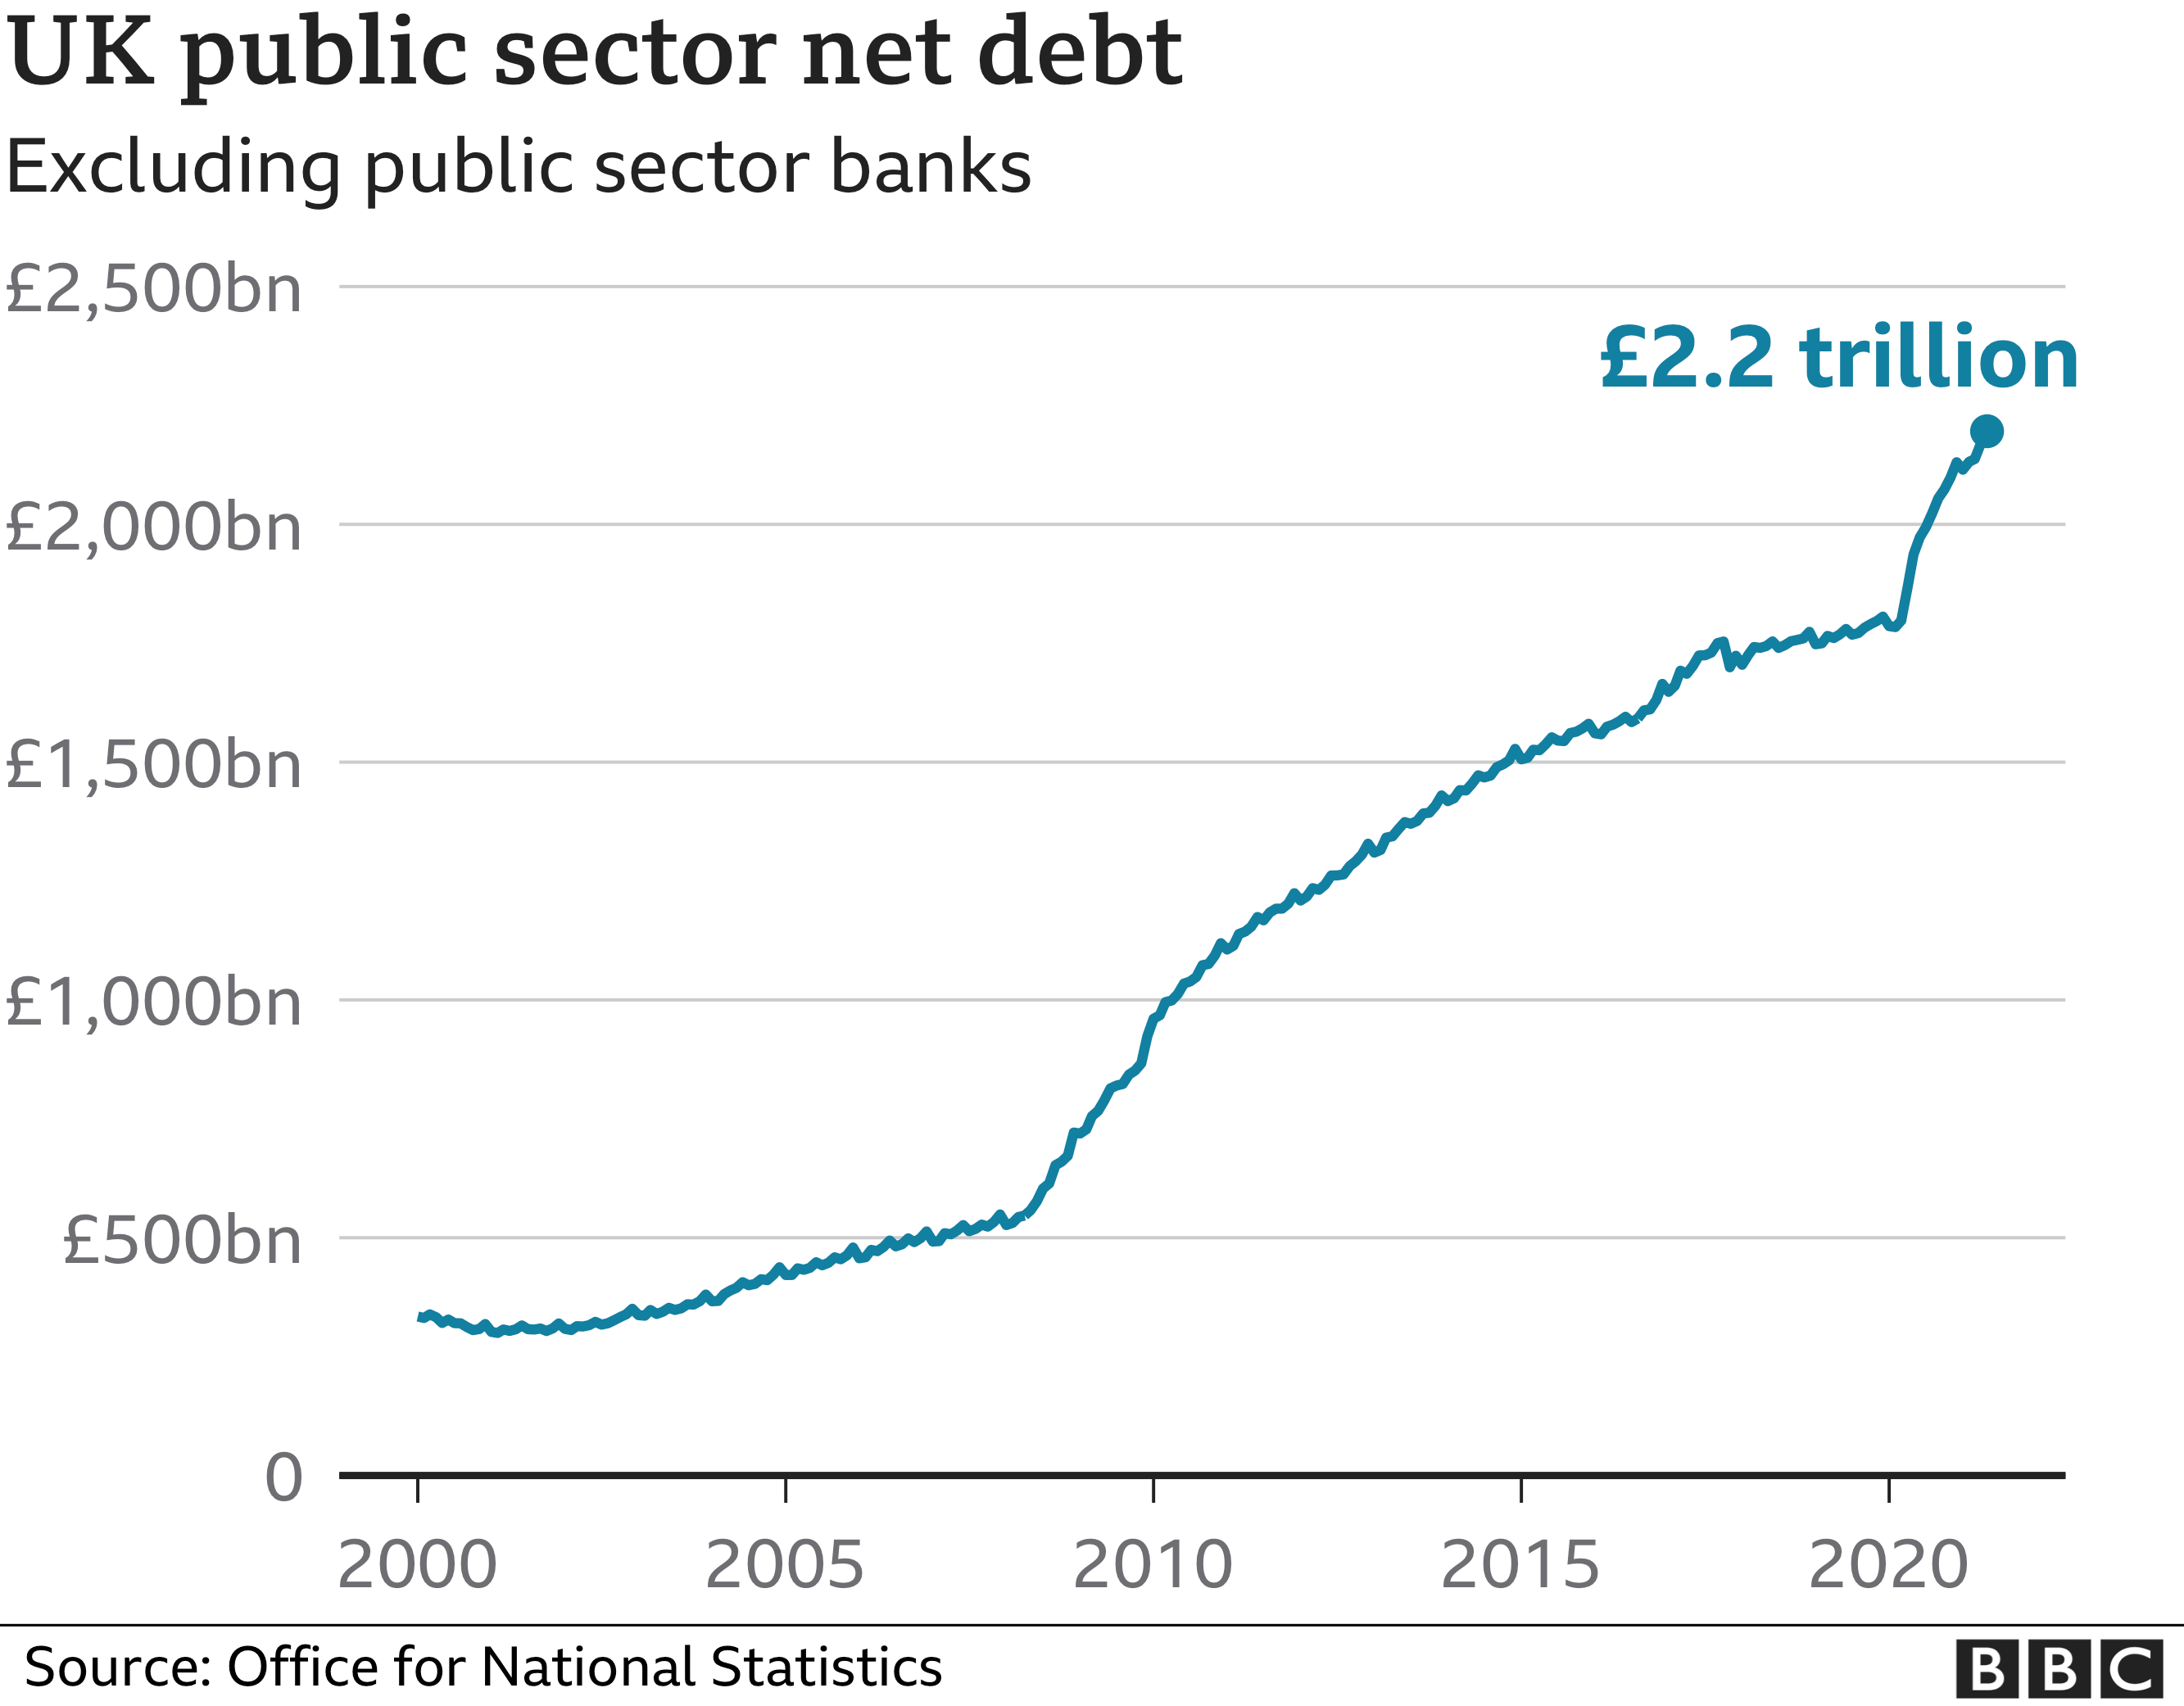 Net debt